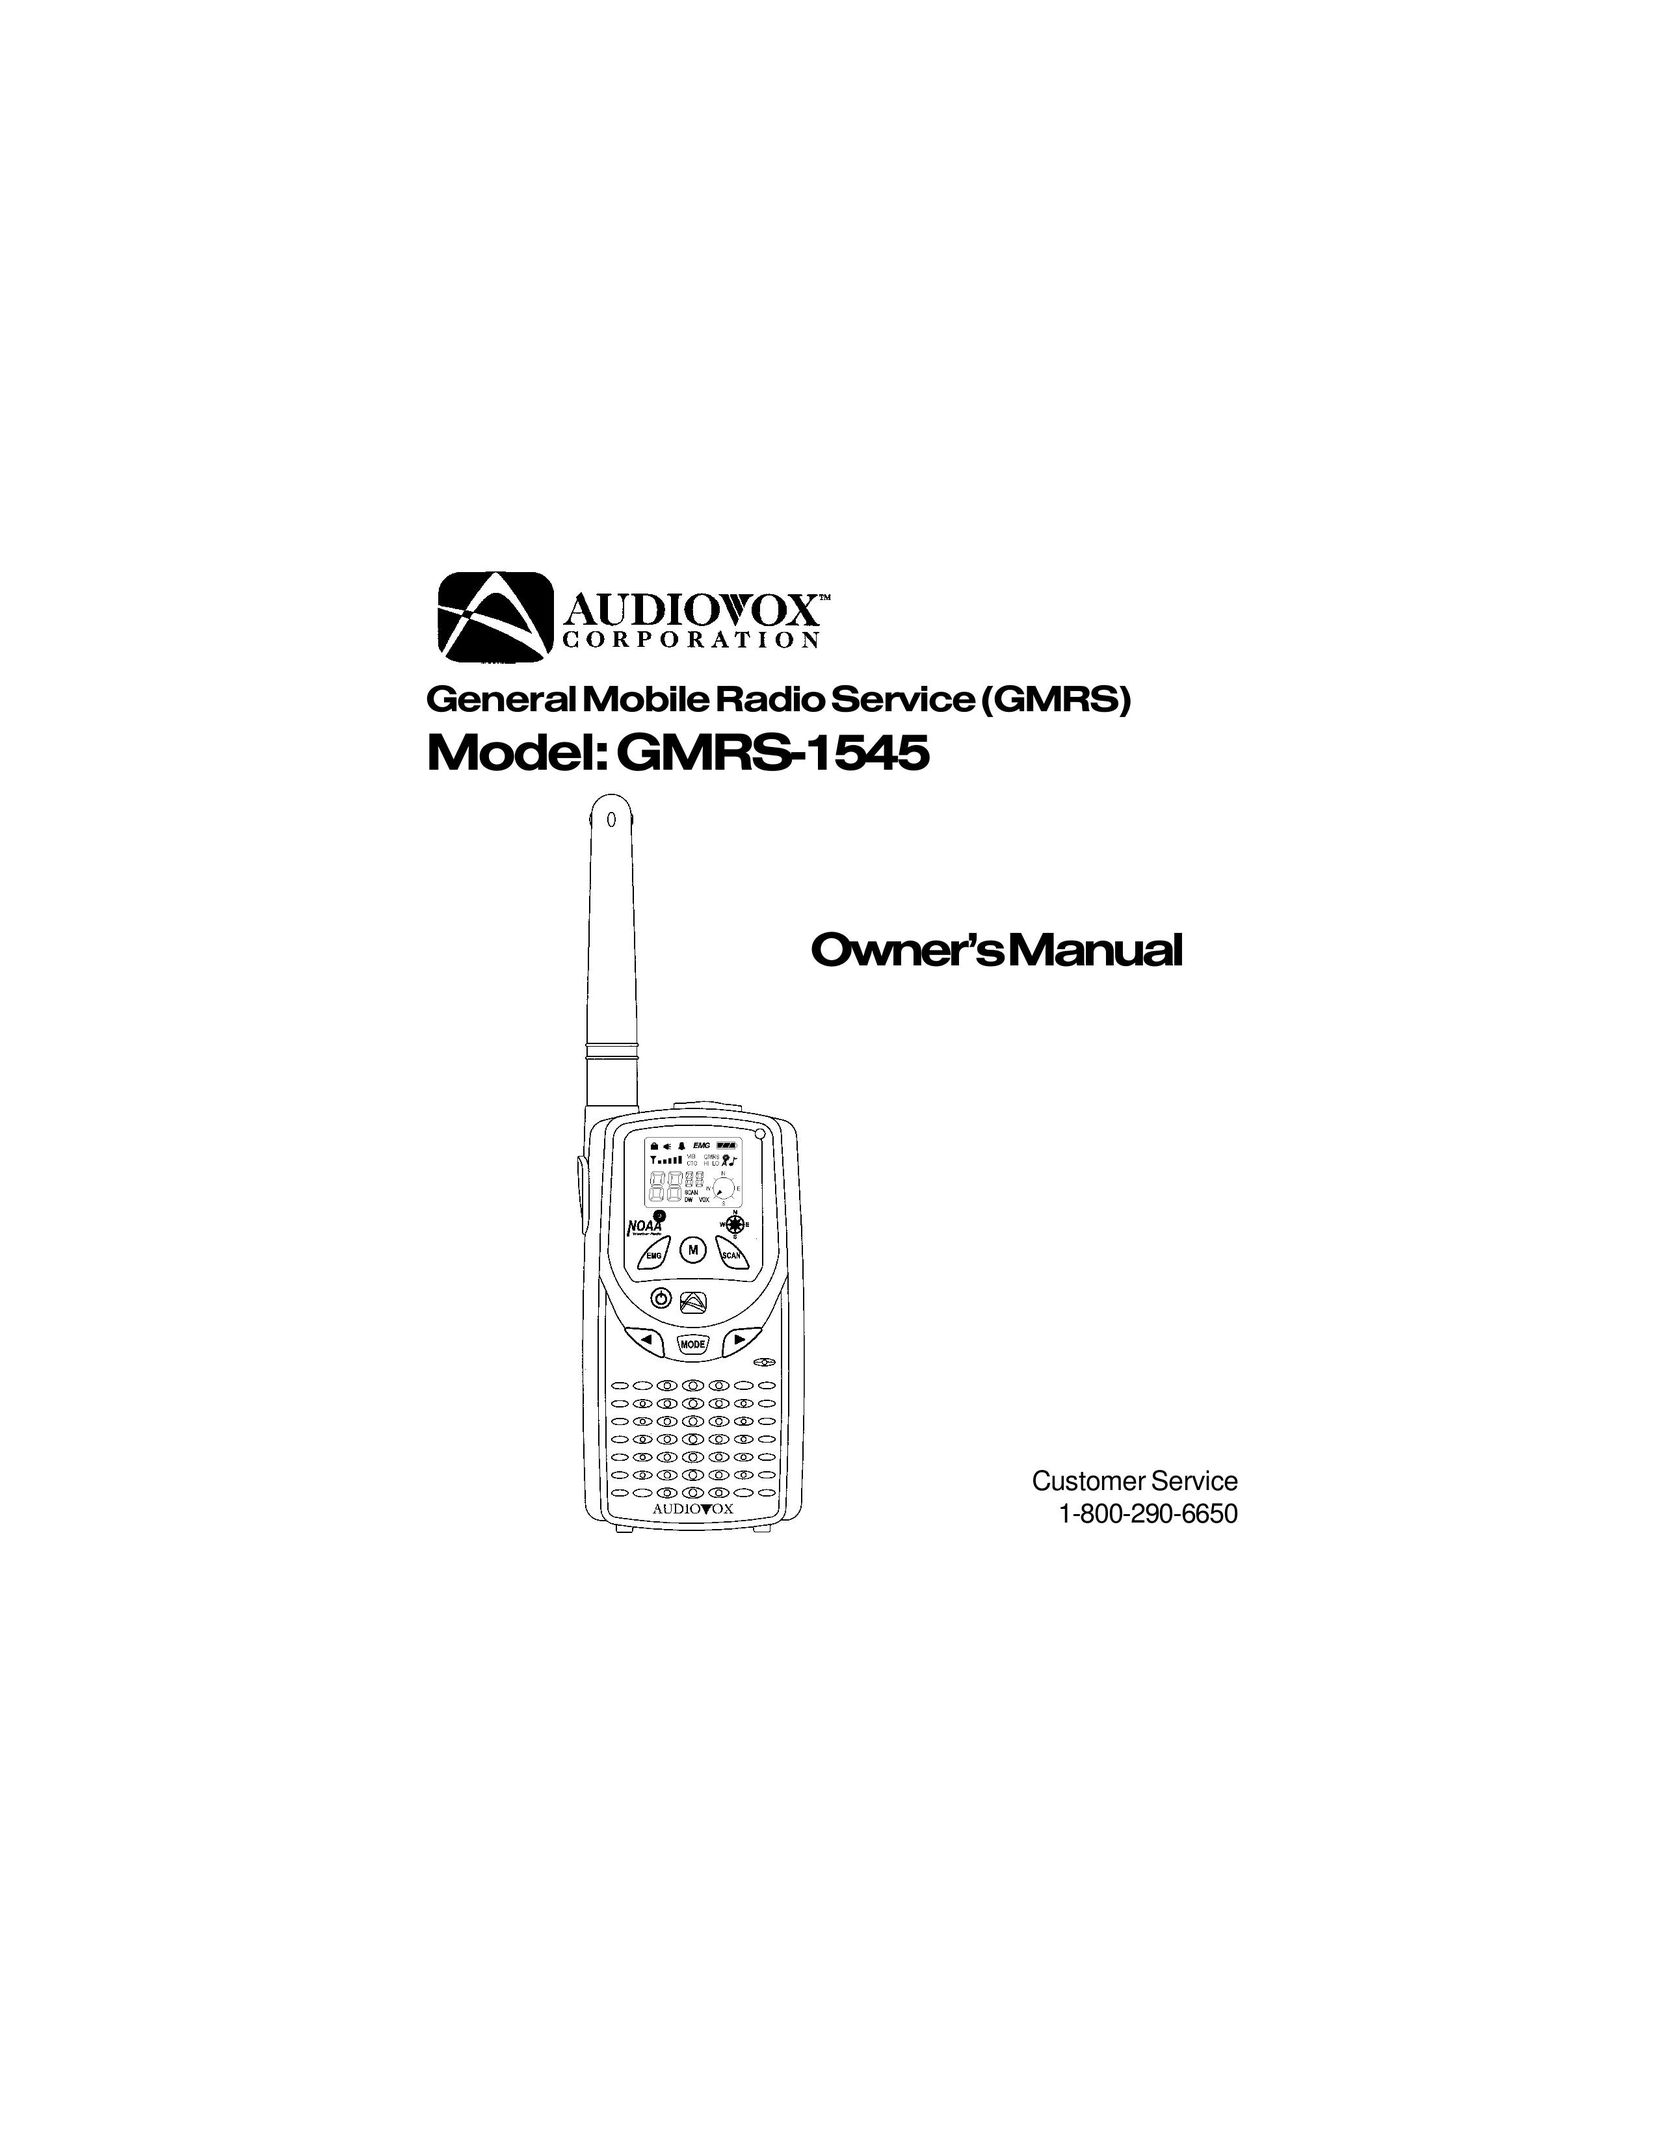 Audiovox GMRS-1545 Two-Way Radio User Manual